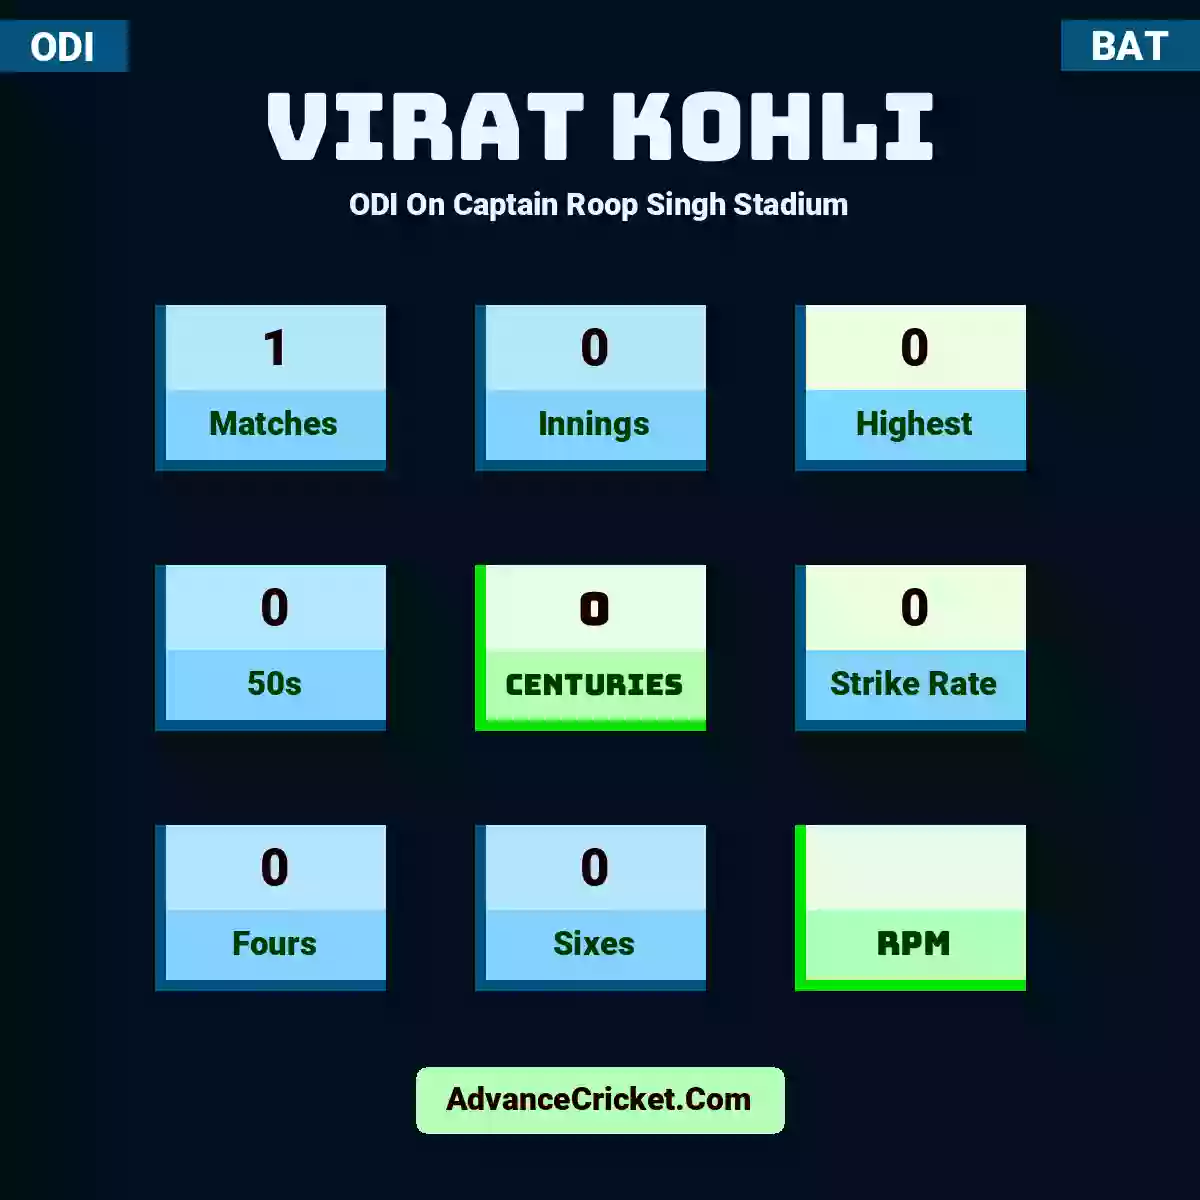 Virat Kohli ODI  On Captain Roop Singh Stadium, Virat Kohli played 1 matches, scored 0 runs as highest, 0 half-centuries, and 0 centuries, with a strike rate of 0. V.Kohli hit 0 fours and 0 sixes.